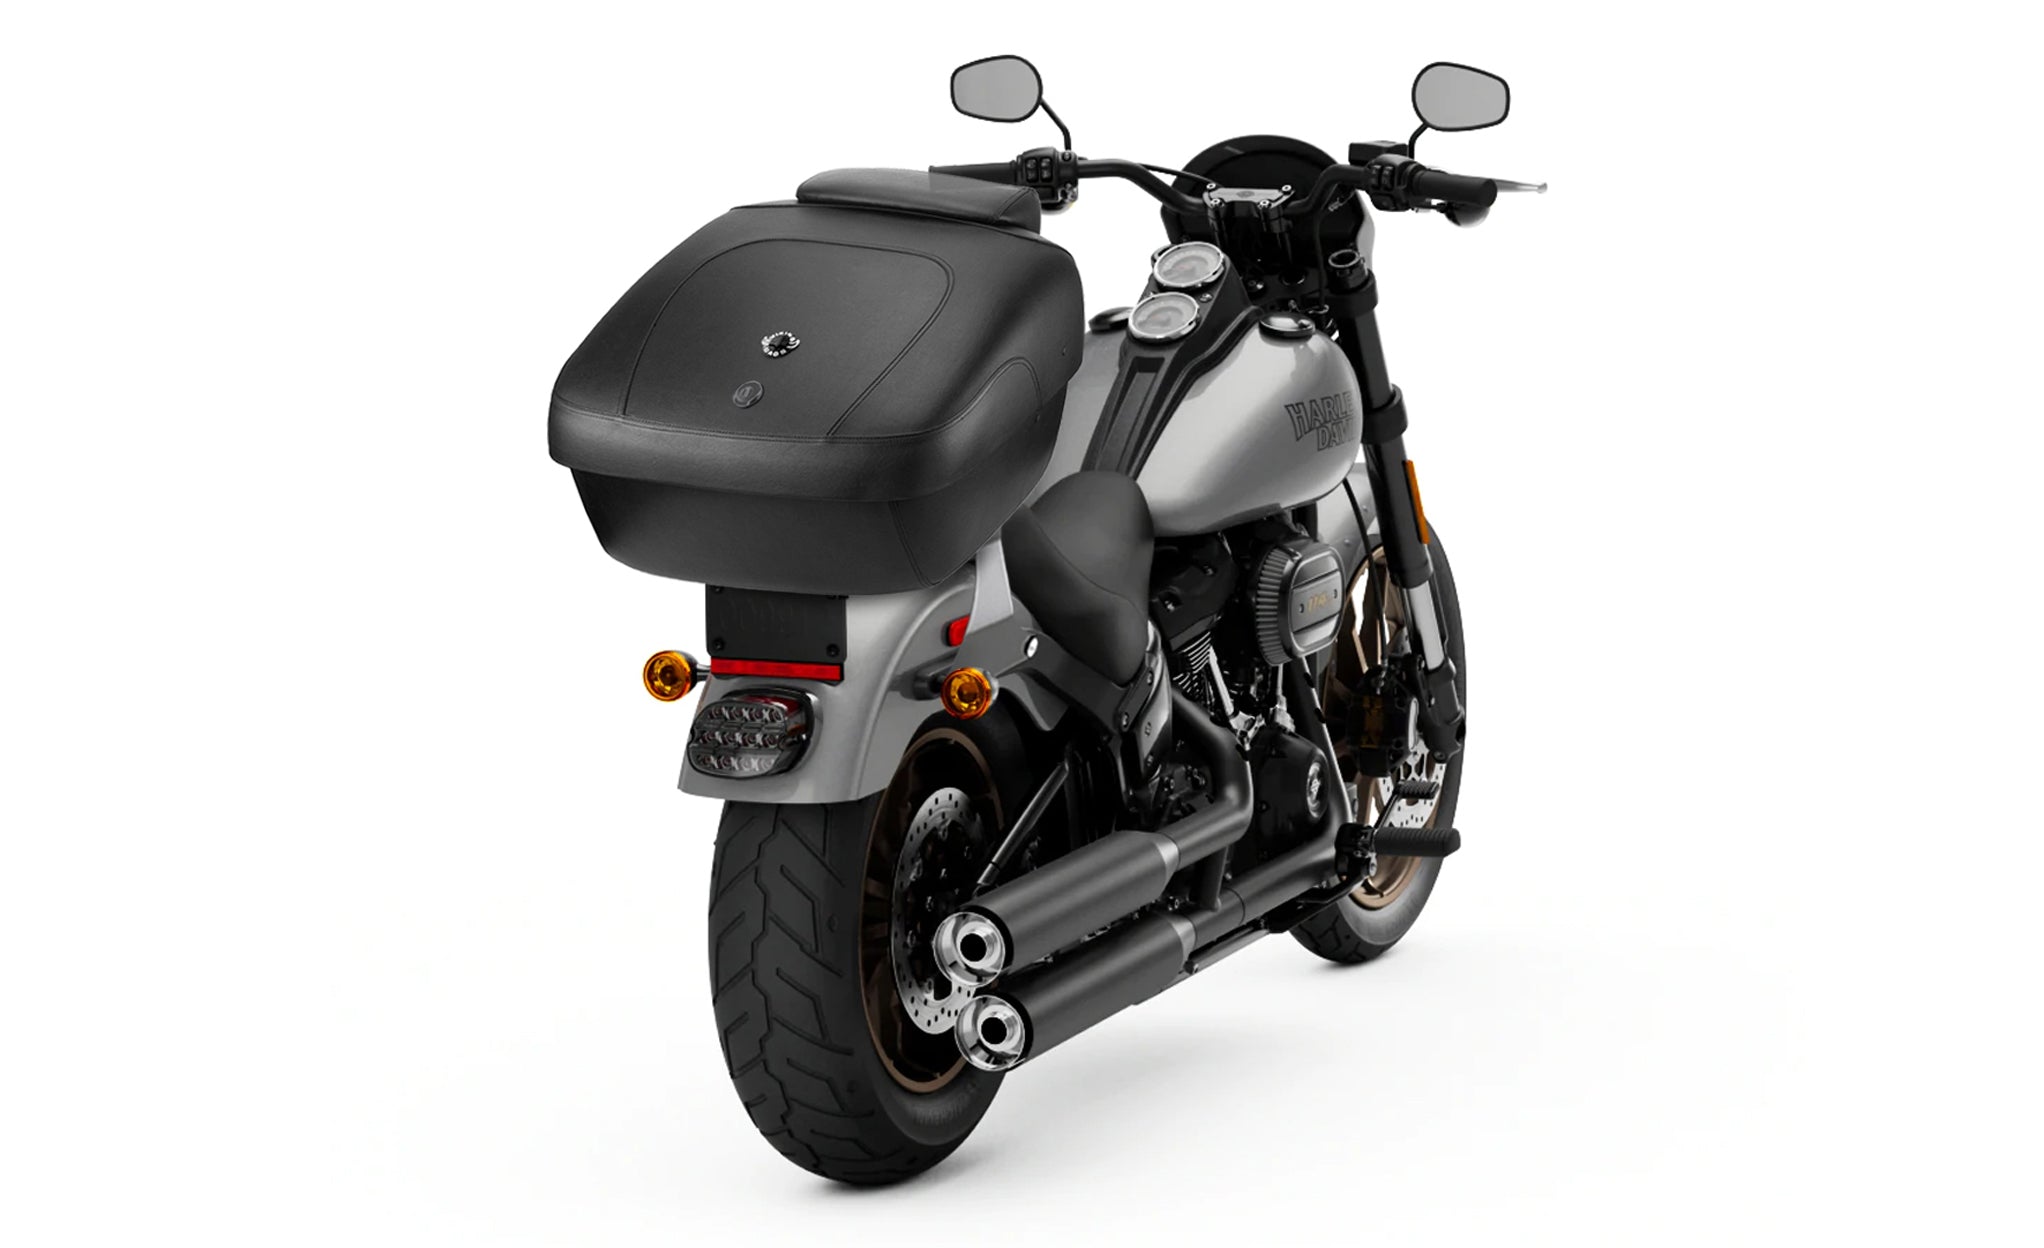 Viking Premium Extra Large Kawasaki Leather Wrapped Hard Motorcycle Trunk Bag on Bike View @expand